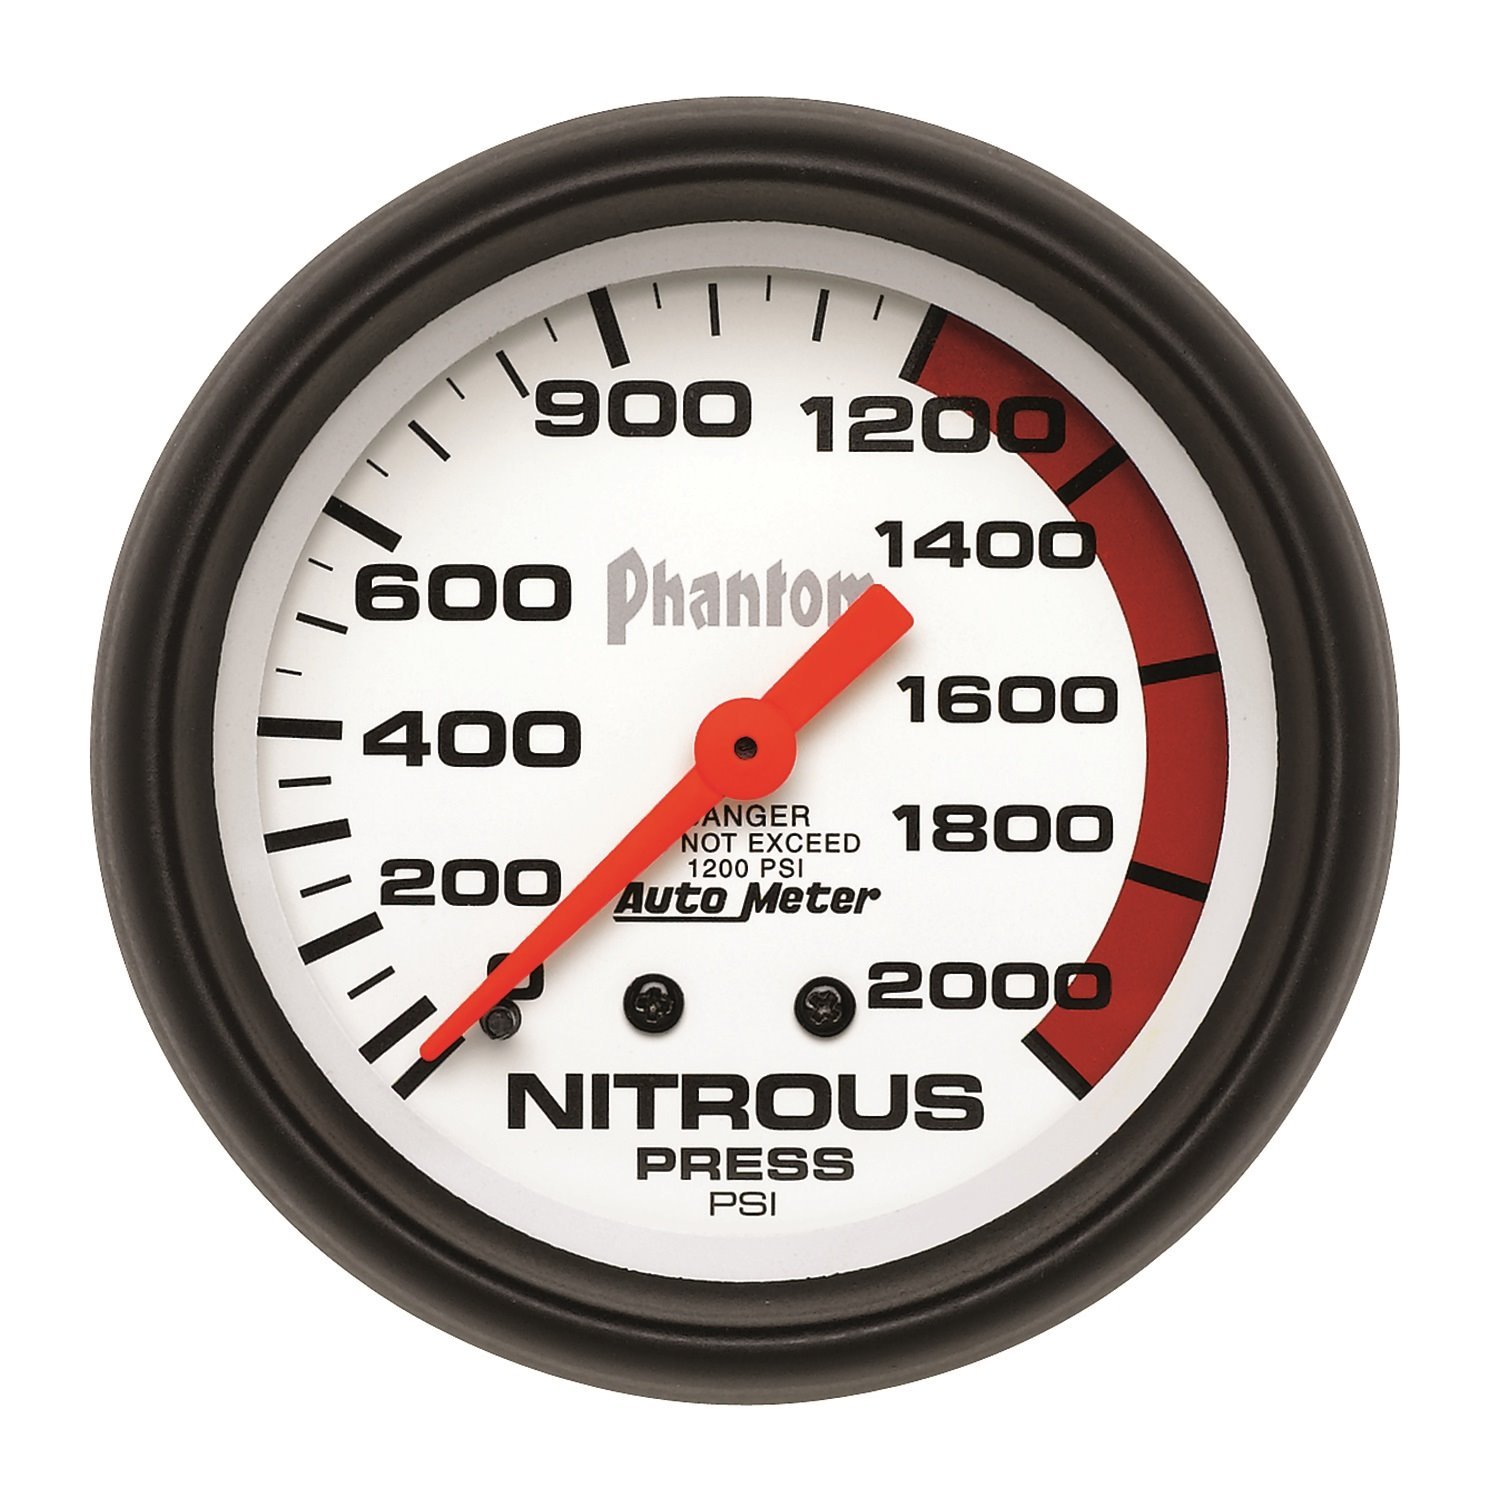 Phantom Nitrous Pressure Gauge 2-5/8" mechanical